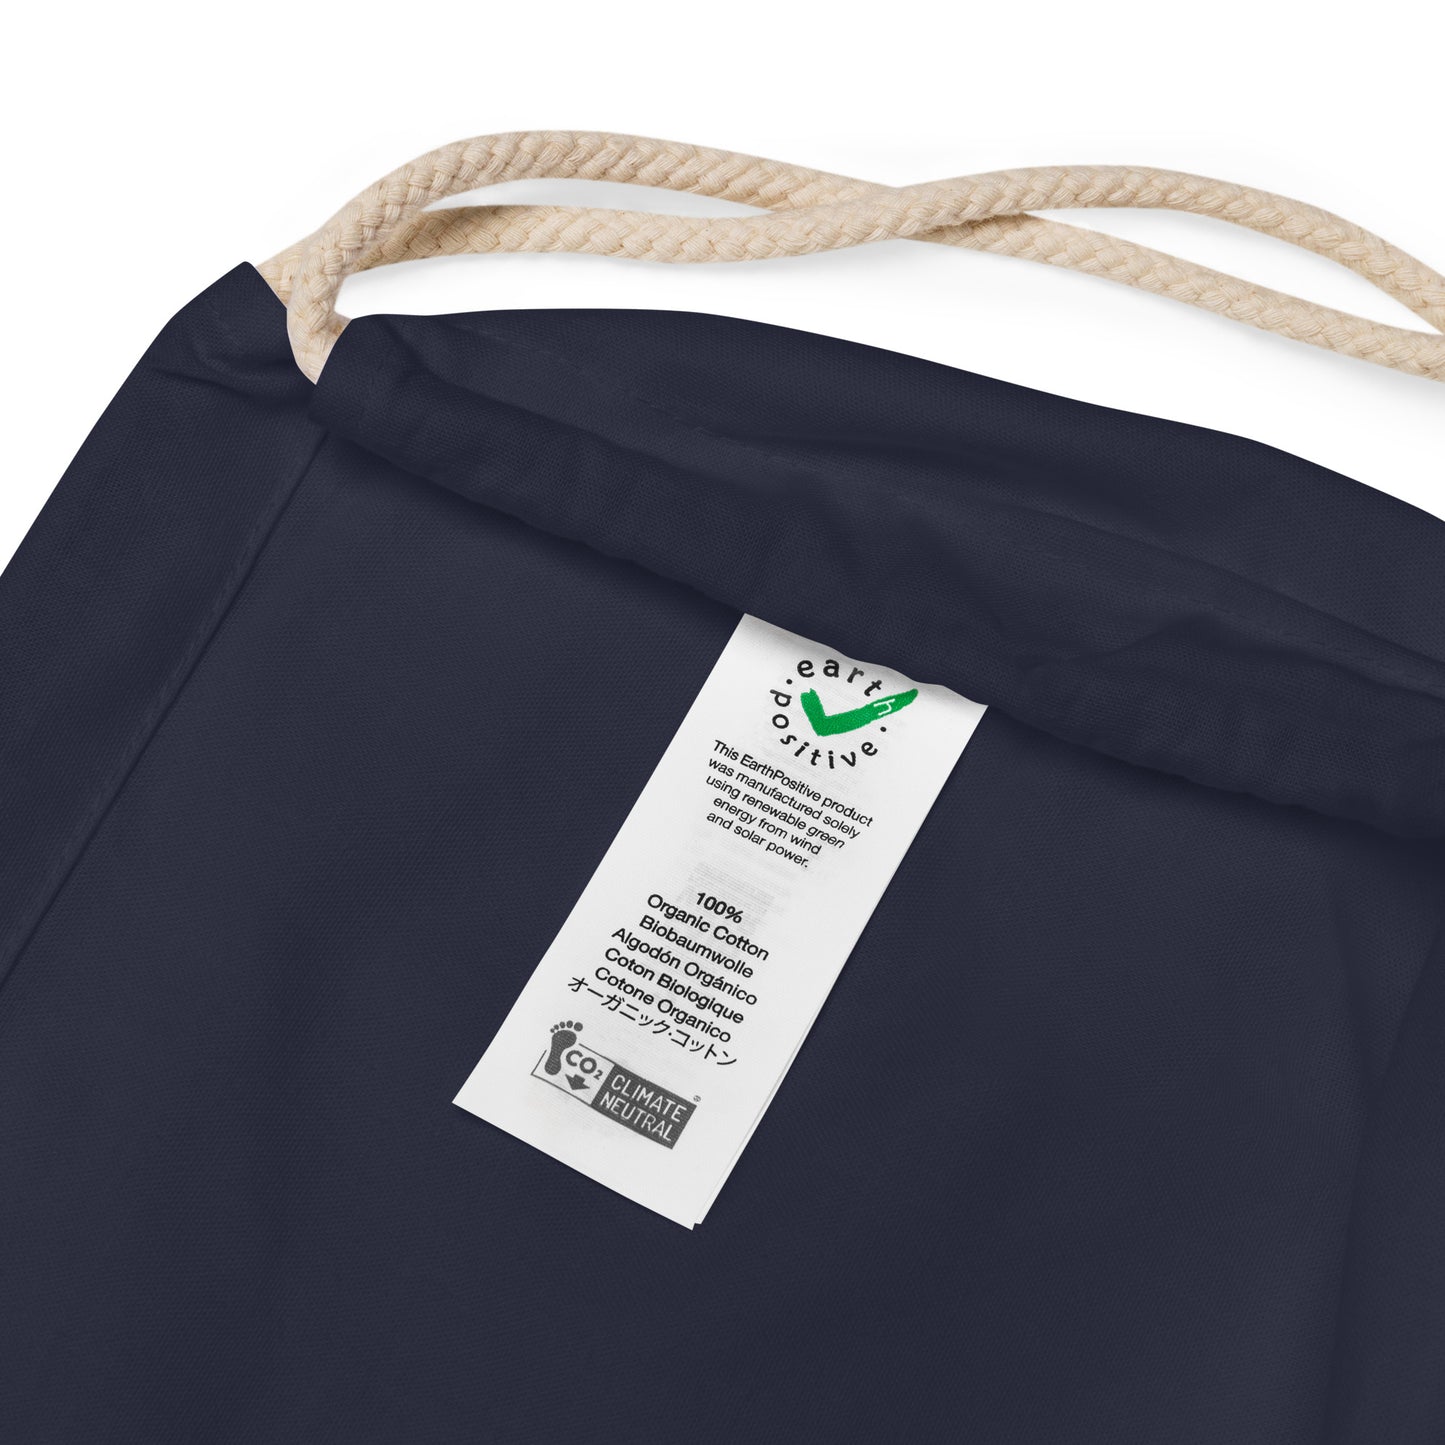 Blessed Organic cotton drawstring bag